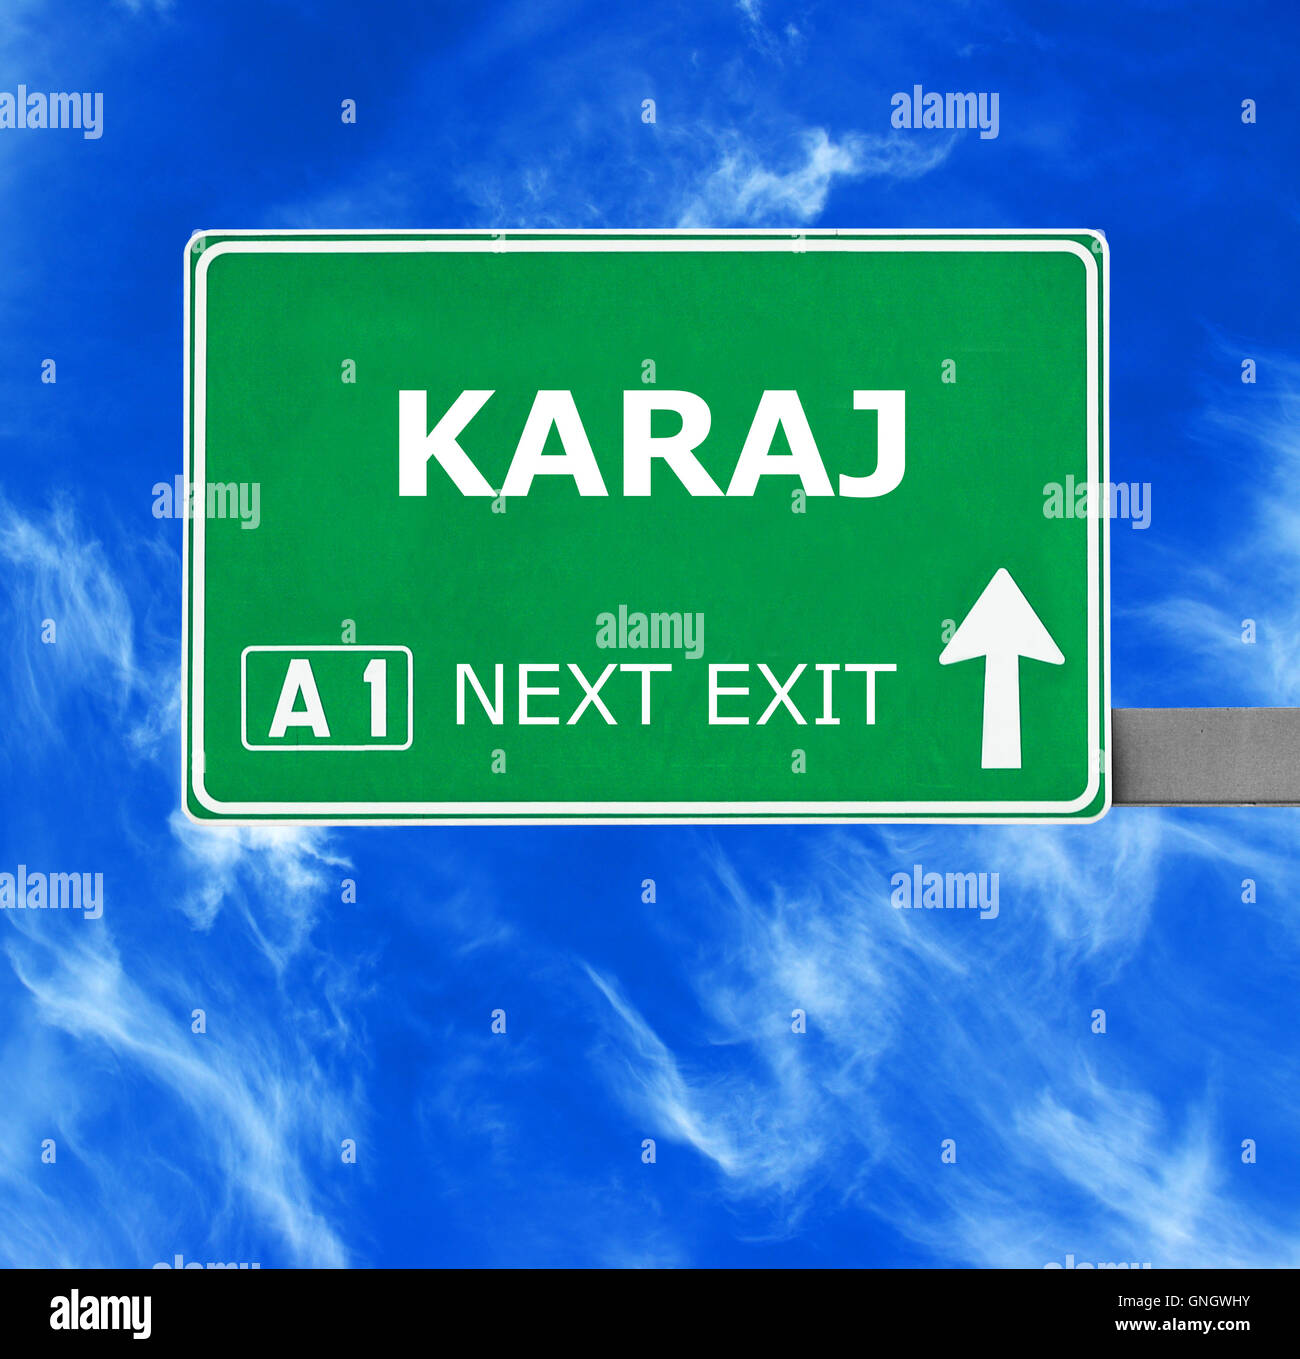 KARAJ road sign against clear blue sky Stock Photo